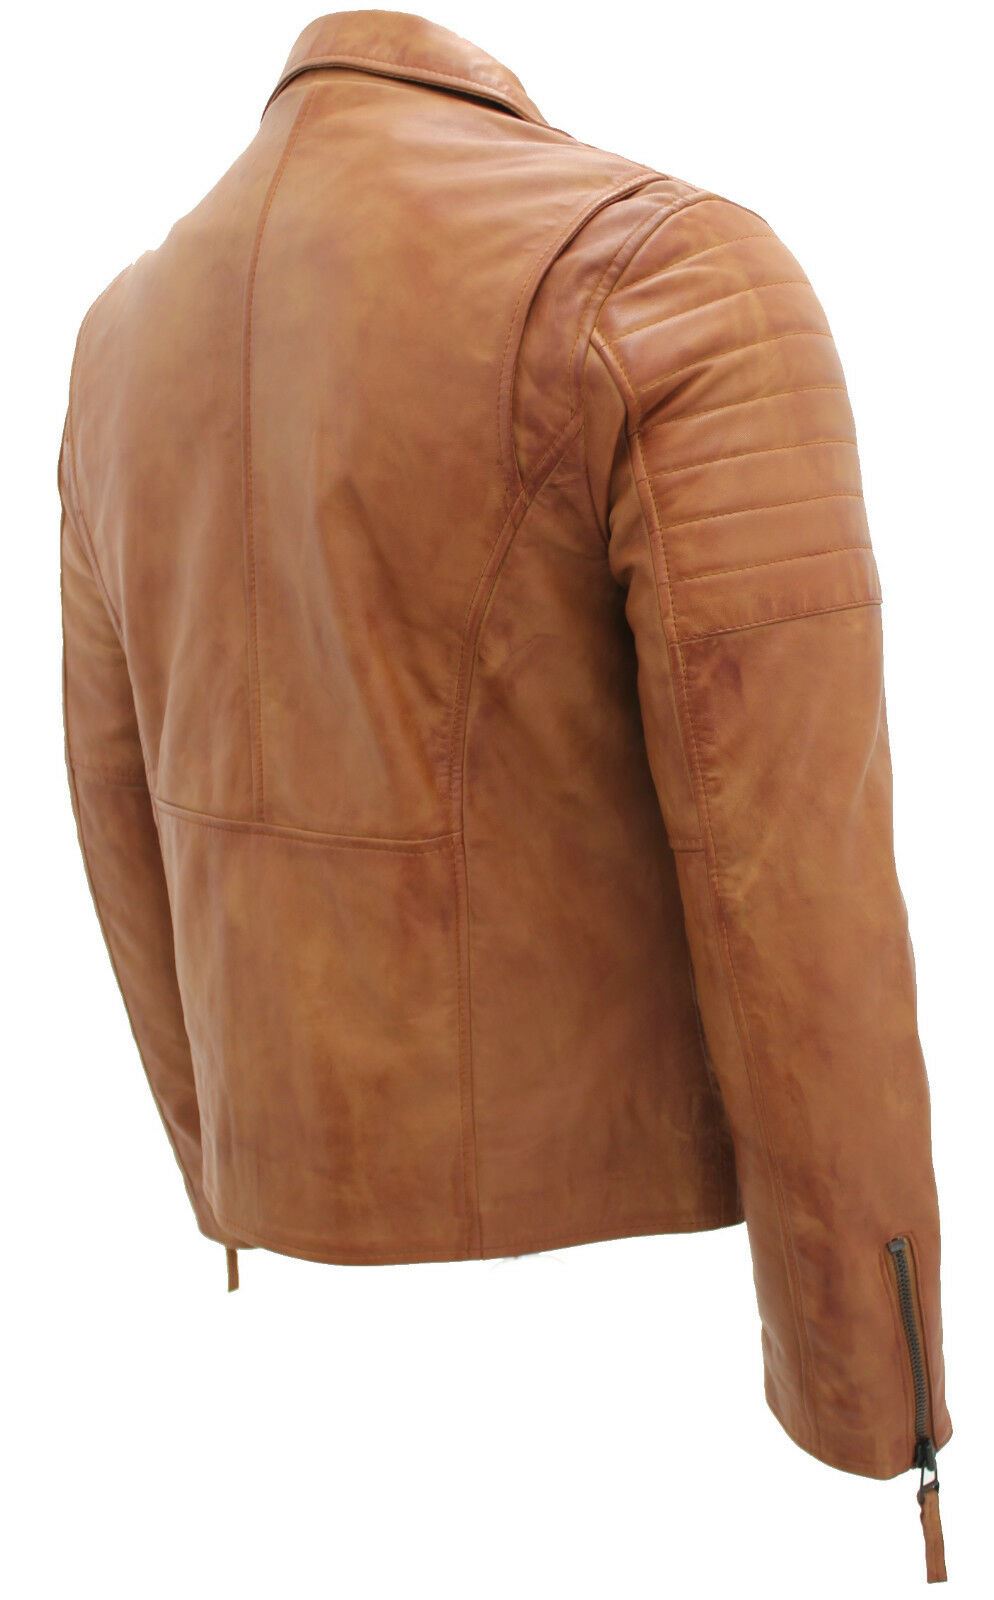 Mens Double Cross Zip Brando Leather Biker Jacket-Shrewsbury - Upperclass Fashions 